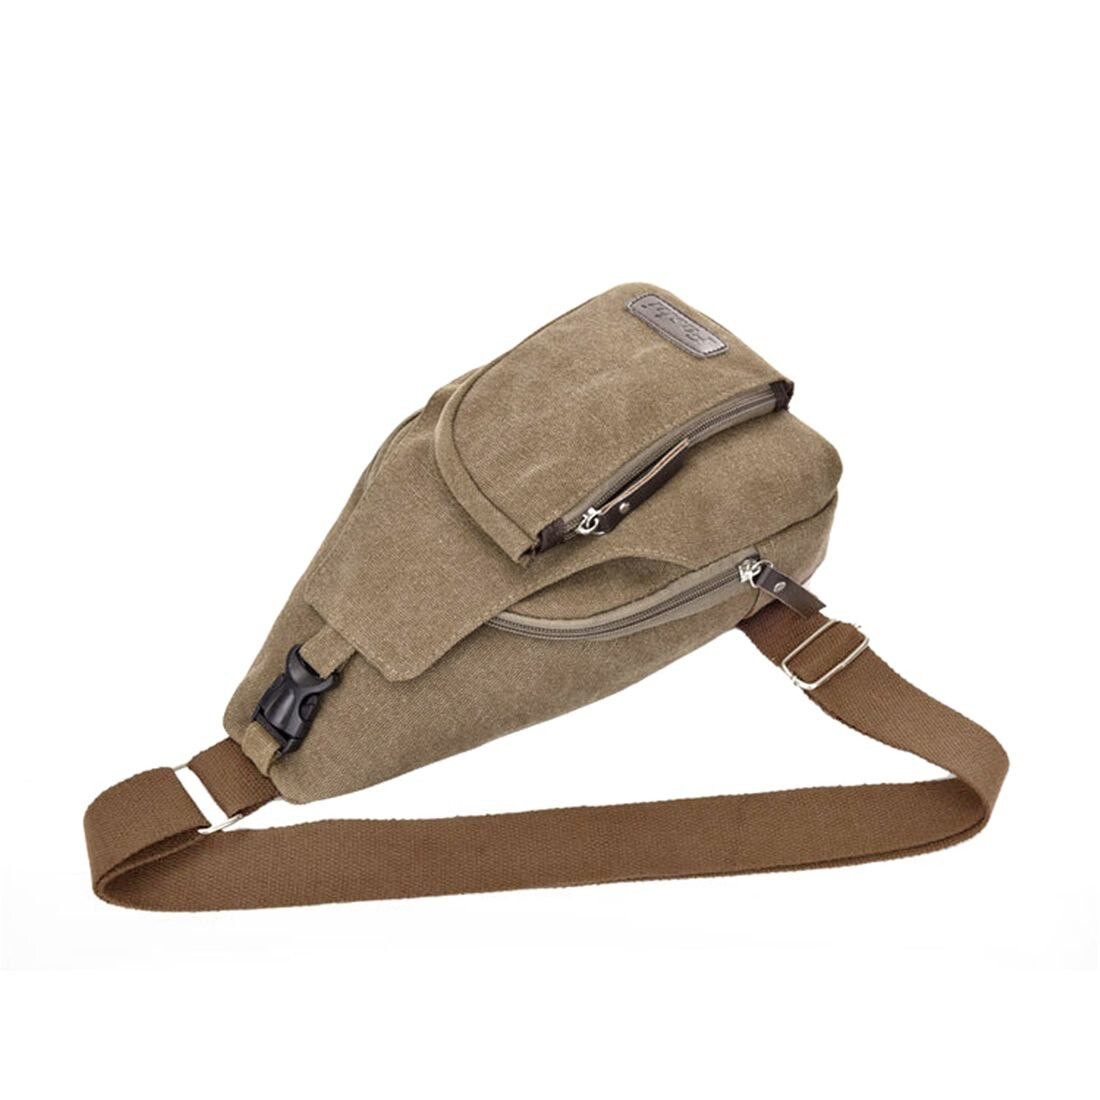 hot casual unisex canvas chest bag multi-function outdoor hiking sports large Messenger bag shoulder bag - ebowsos